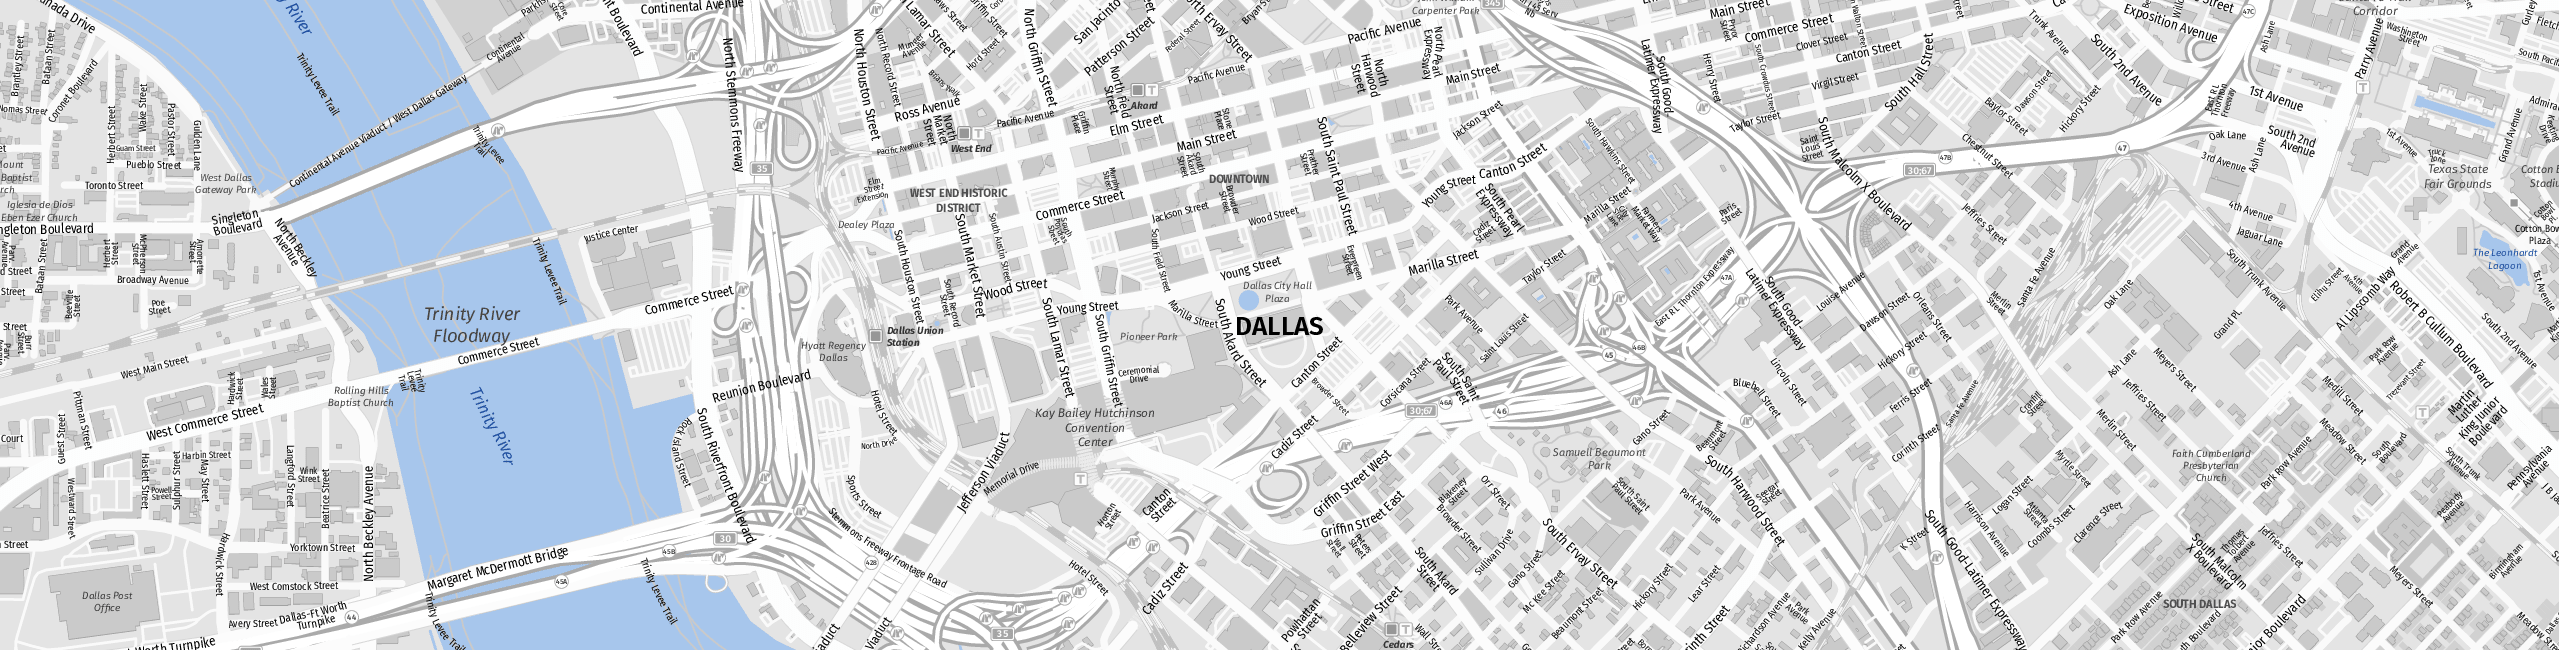 Stadtplan Dallas zum Downloaden.